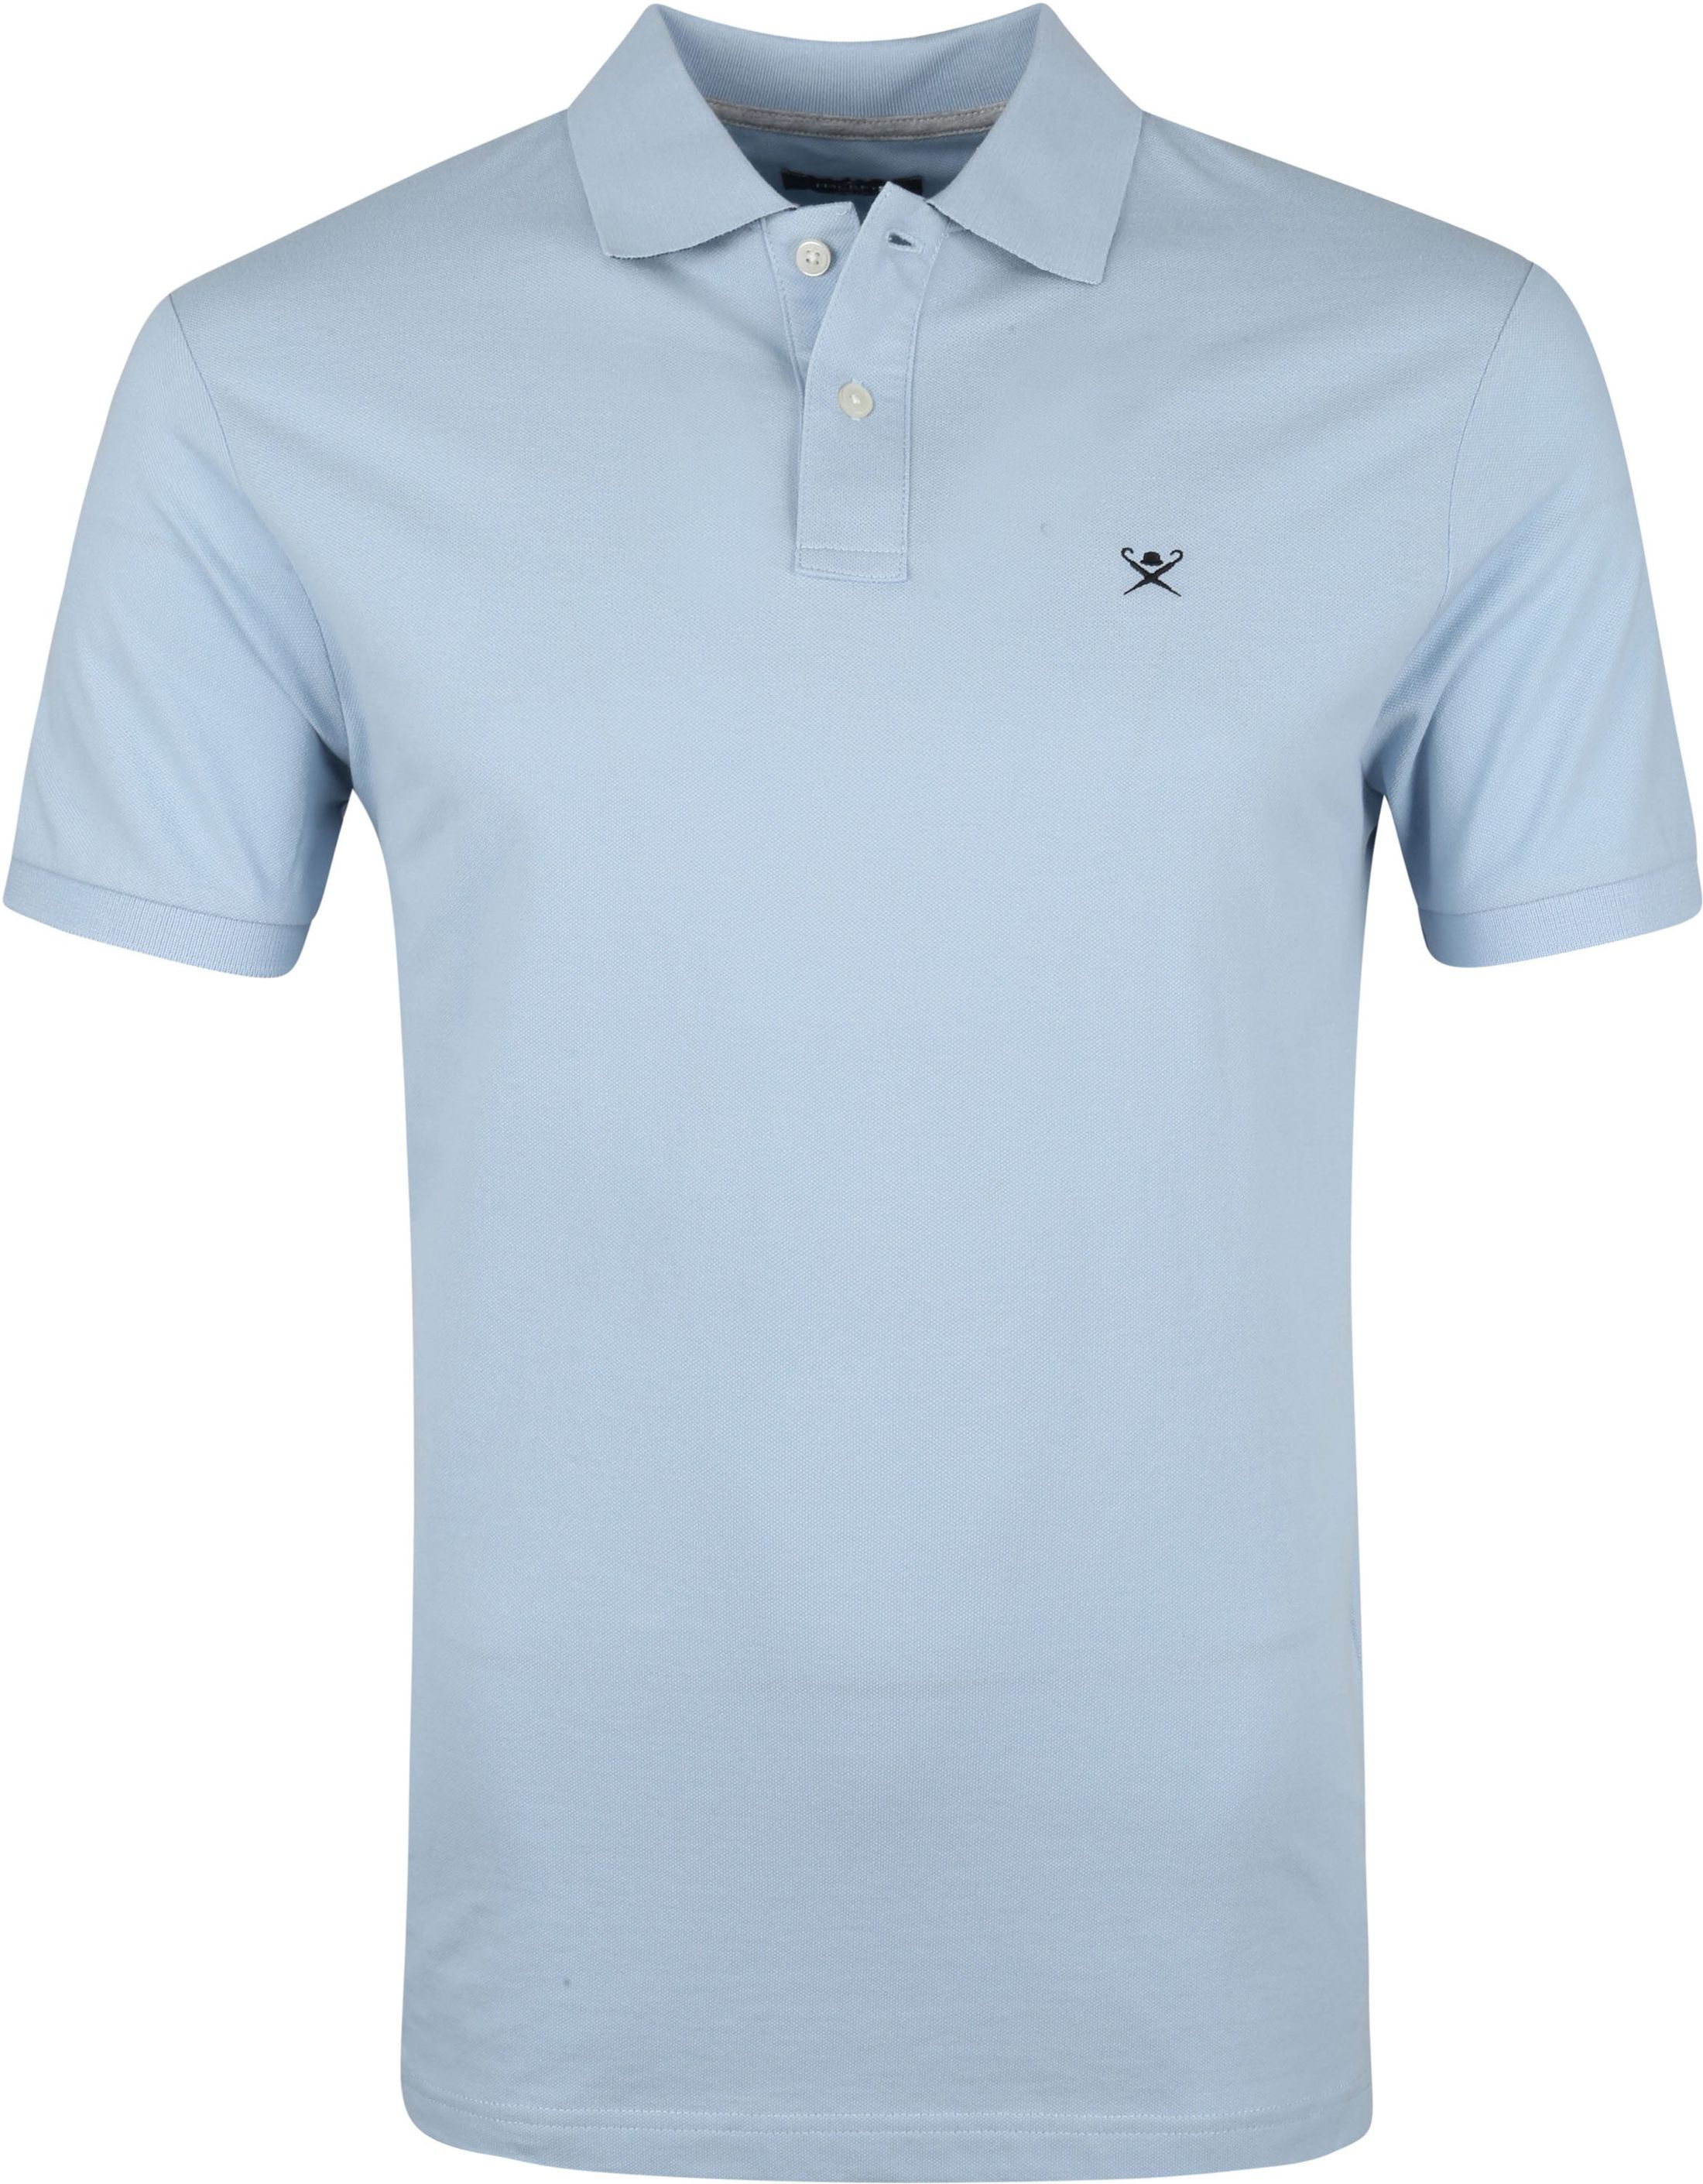 Hackett Polo Shirt Chambry Blue size L